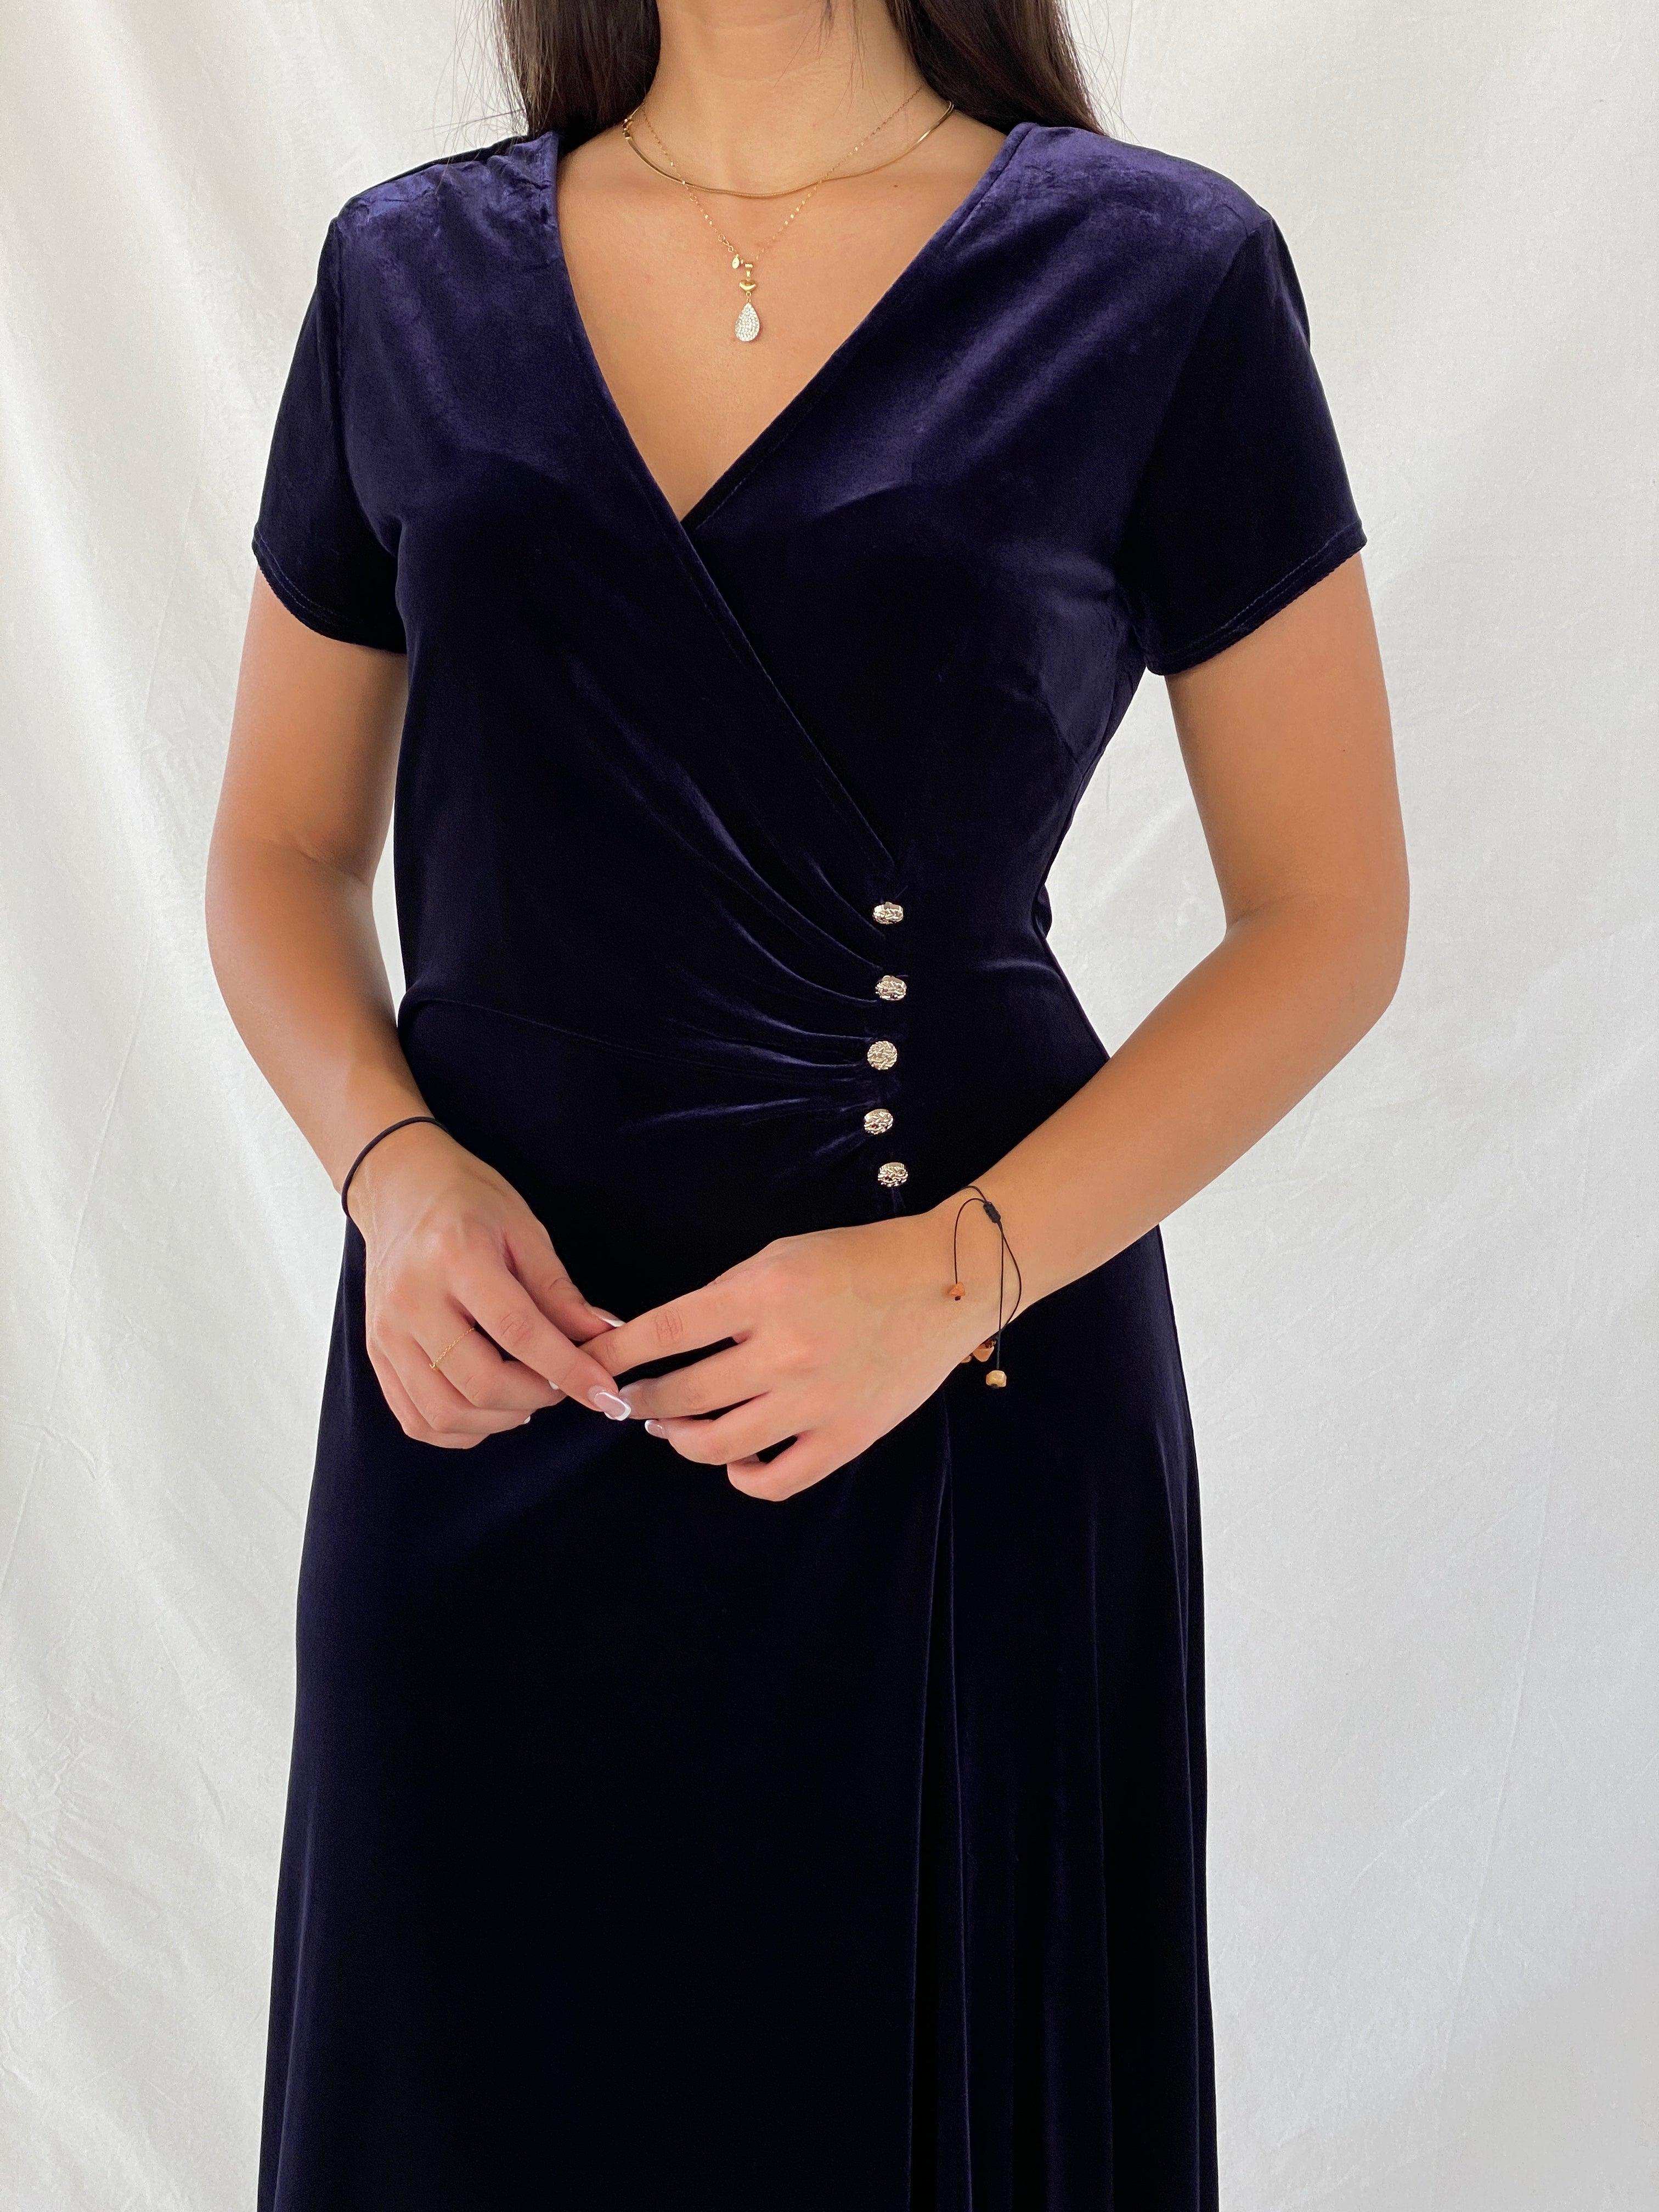 Gorgeous SIGNATURE By Robbie Bee Dark Navy Velvet Dress- Size